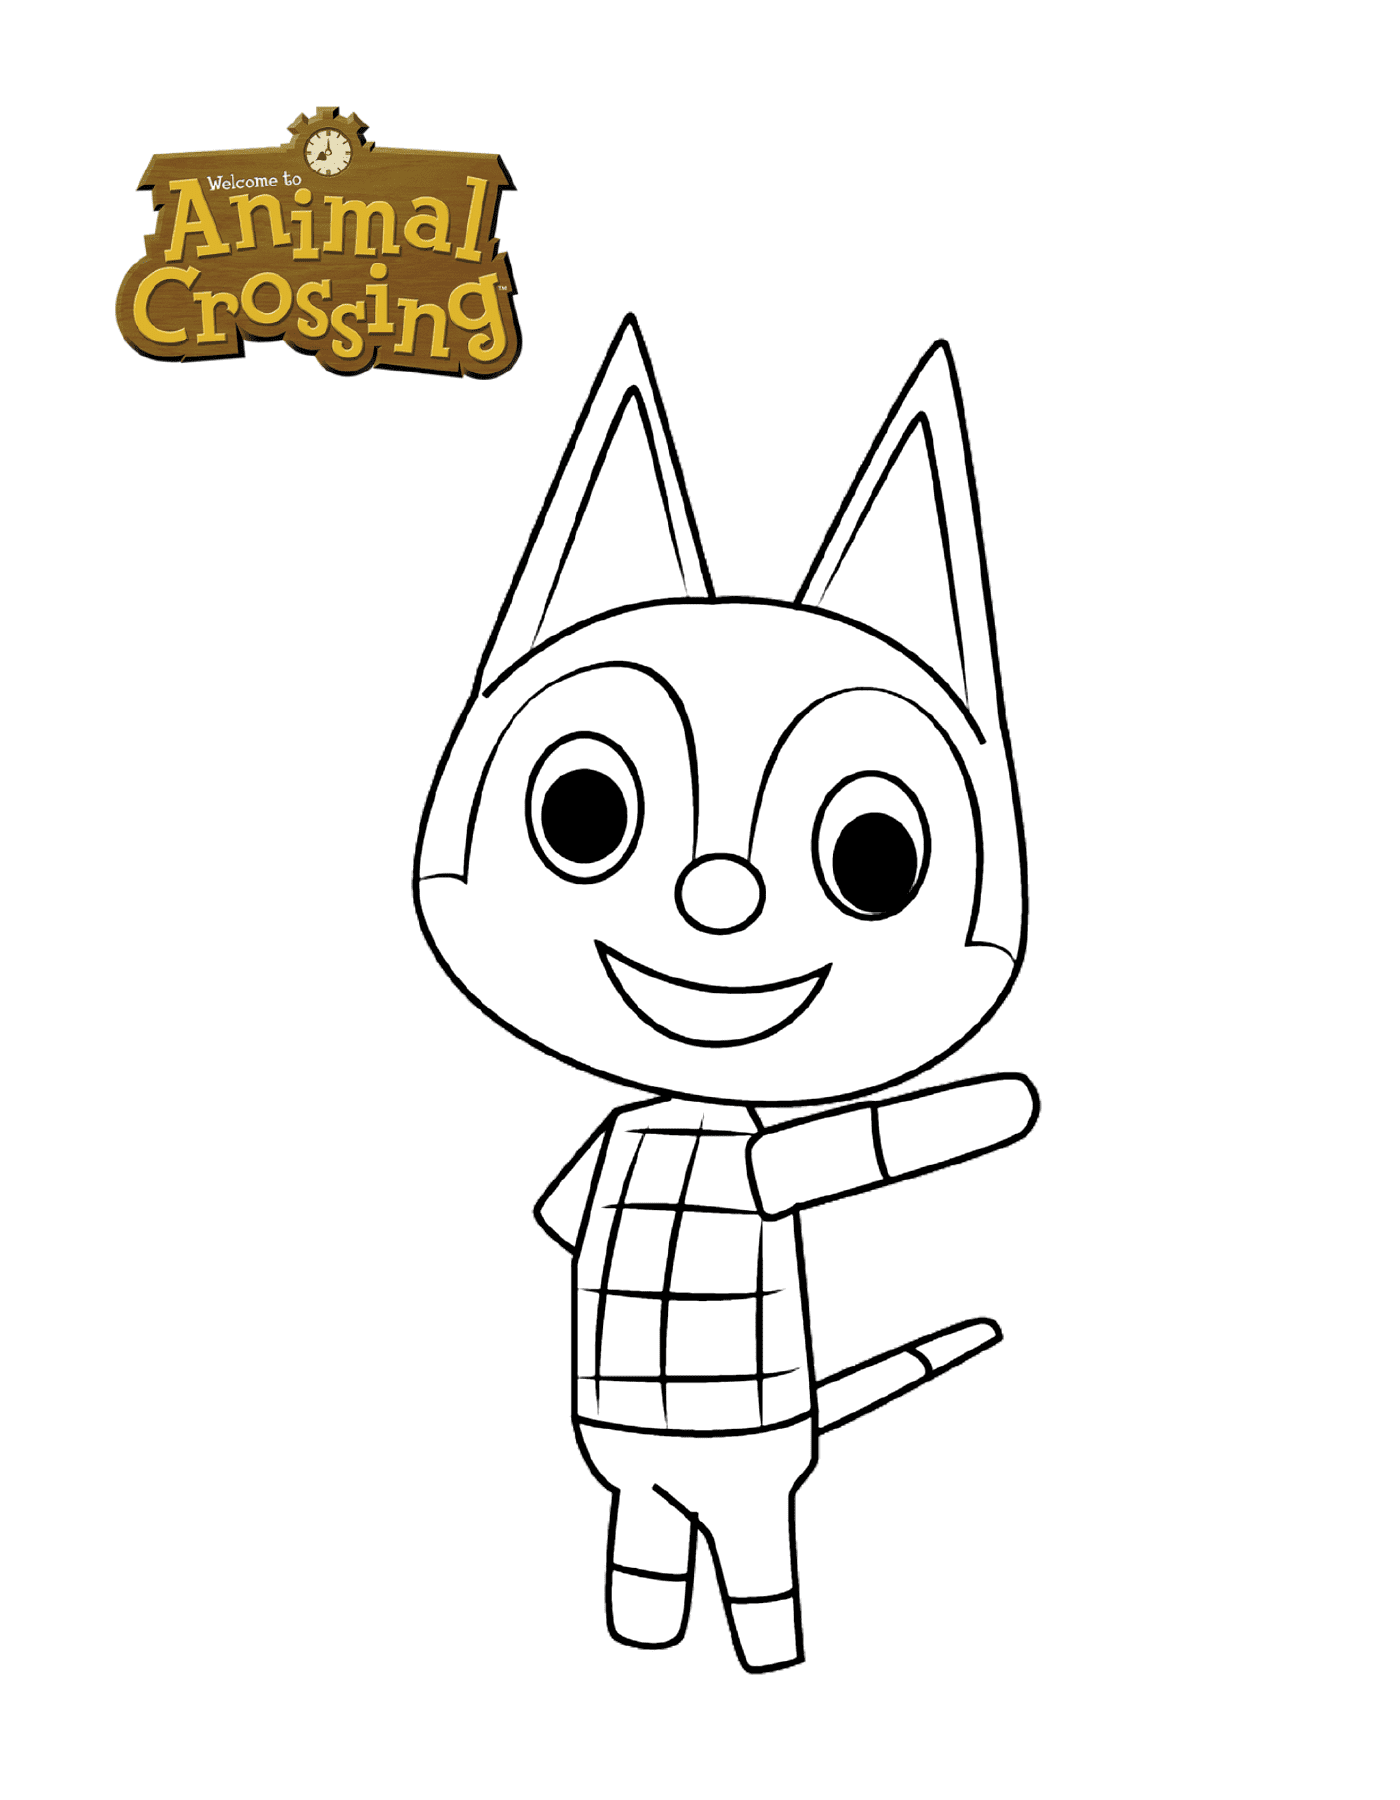  Rudy's Animal Crossing's cat 